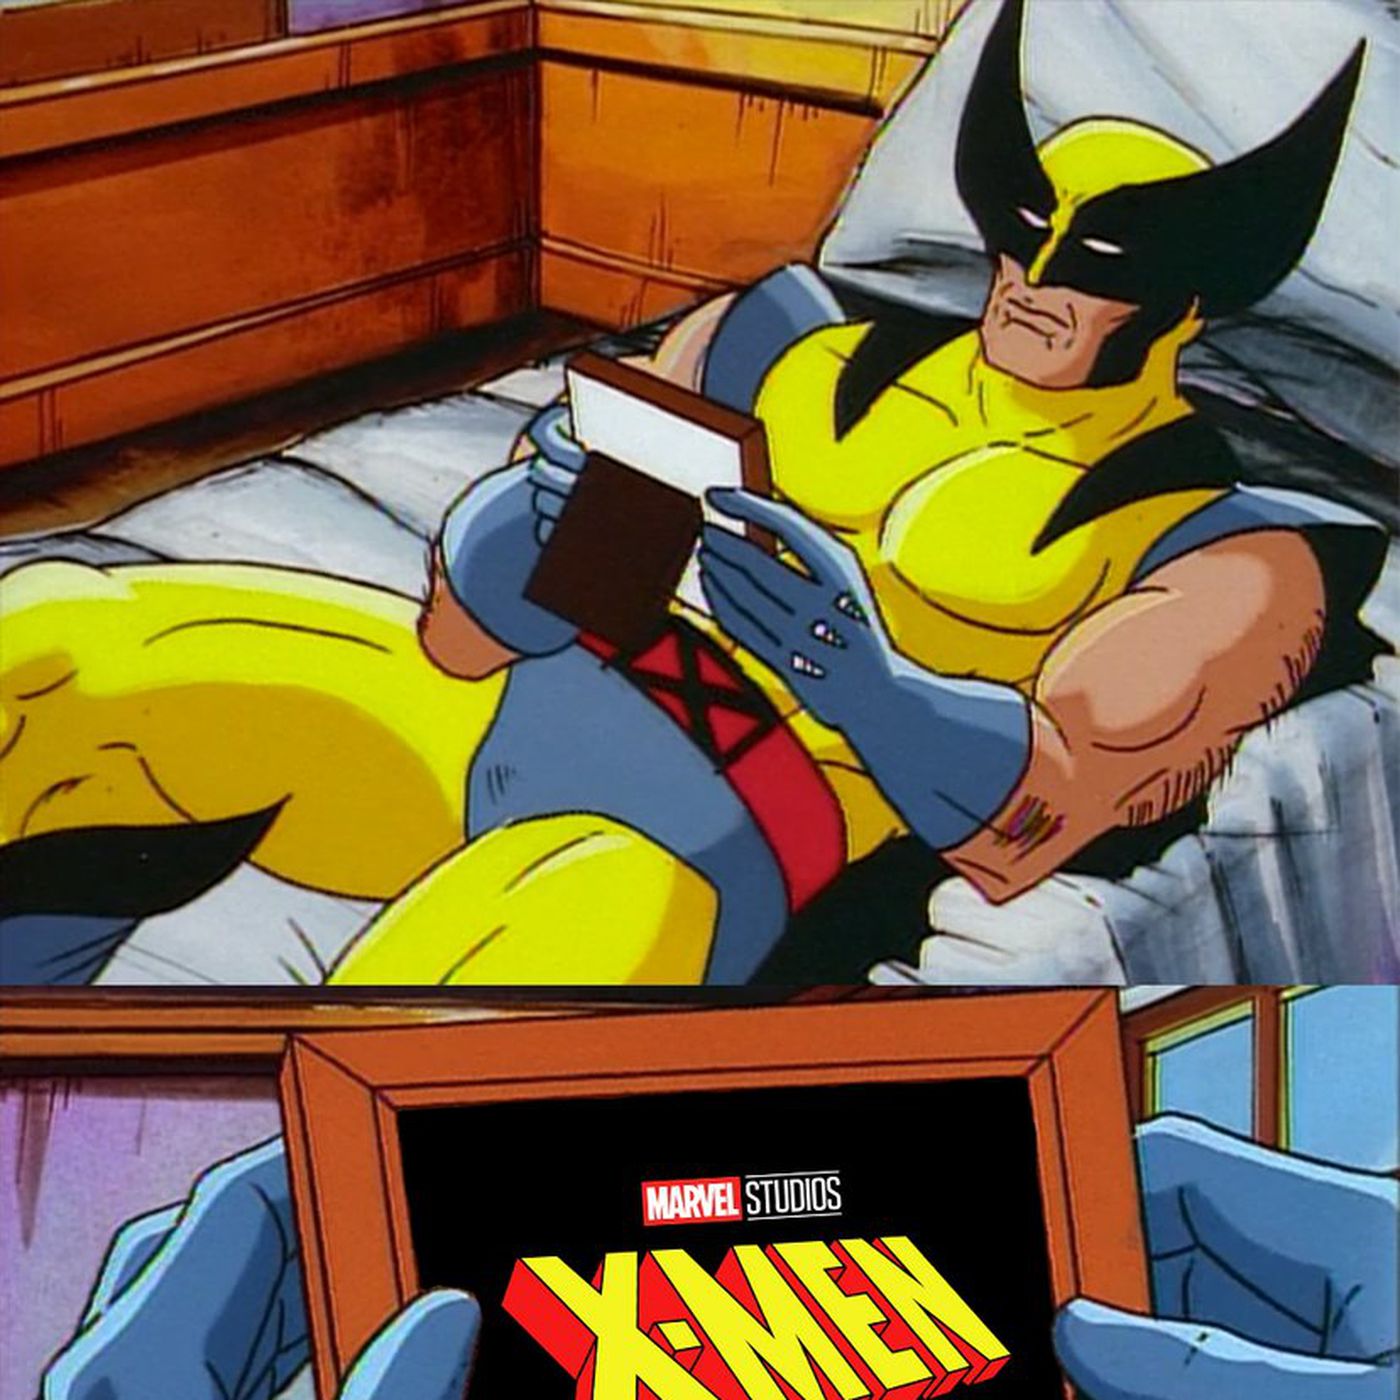 Marvel embraces the Sad Wolverine meme to announce X-Men '97, a new animated  Disney Plus show - The Verge